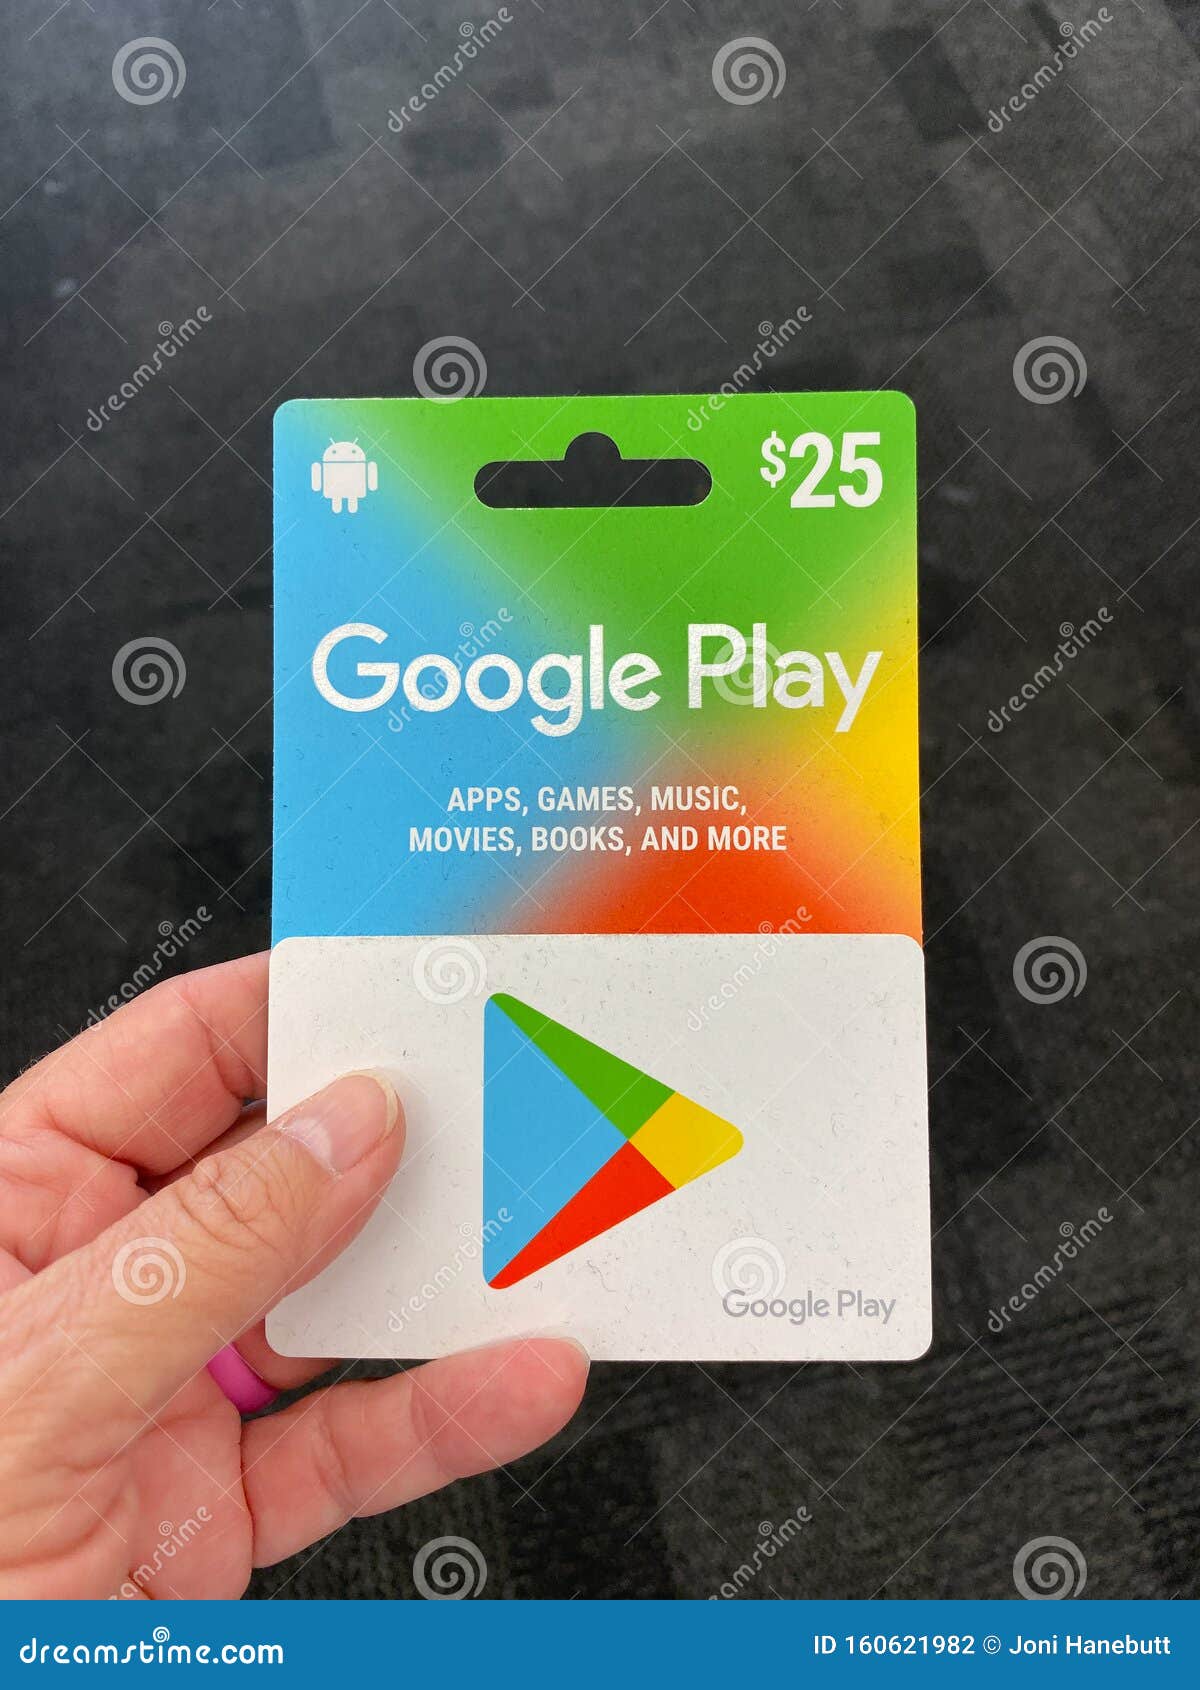 How Do I Send a Google Play Gift Card 